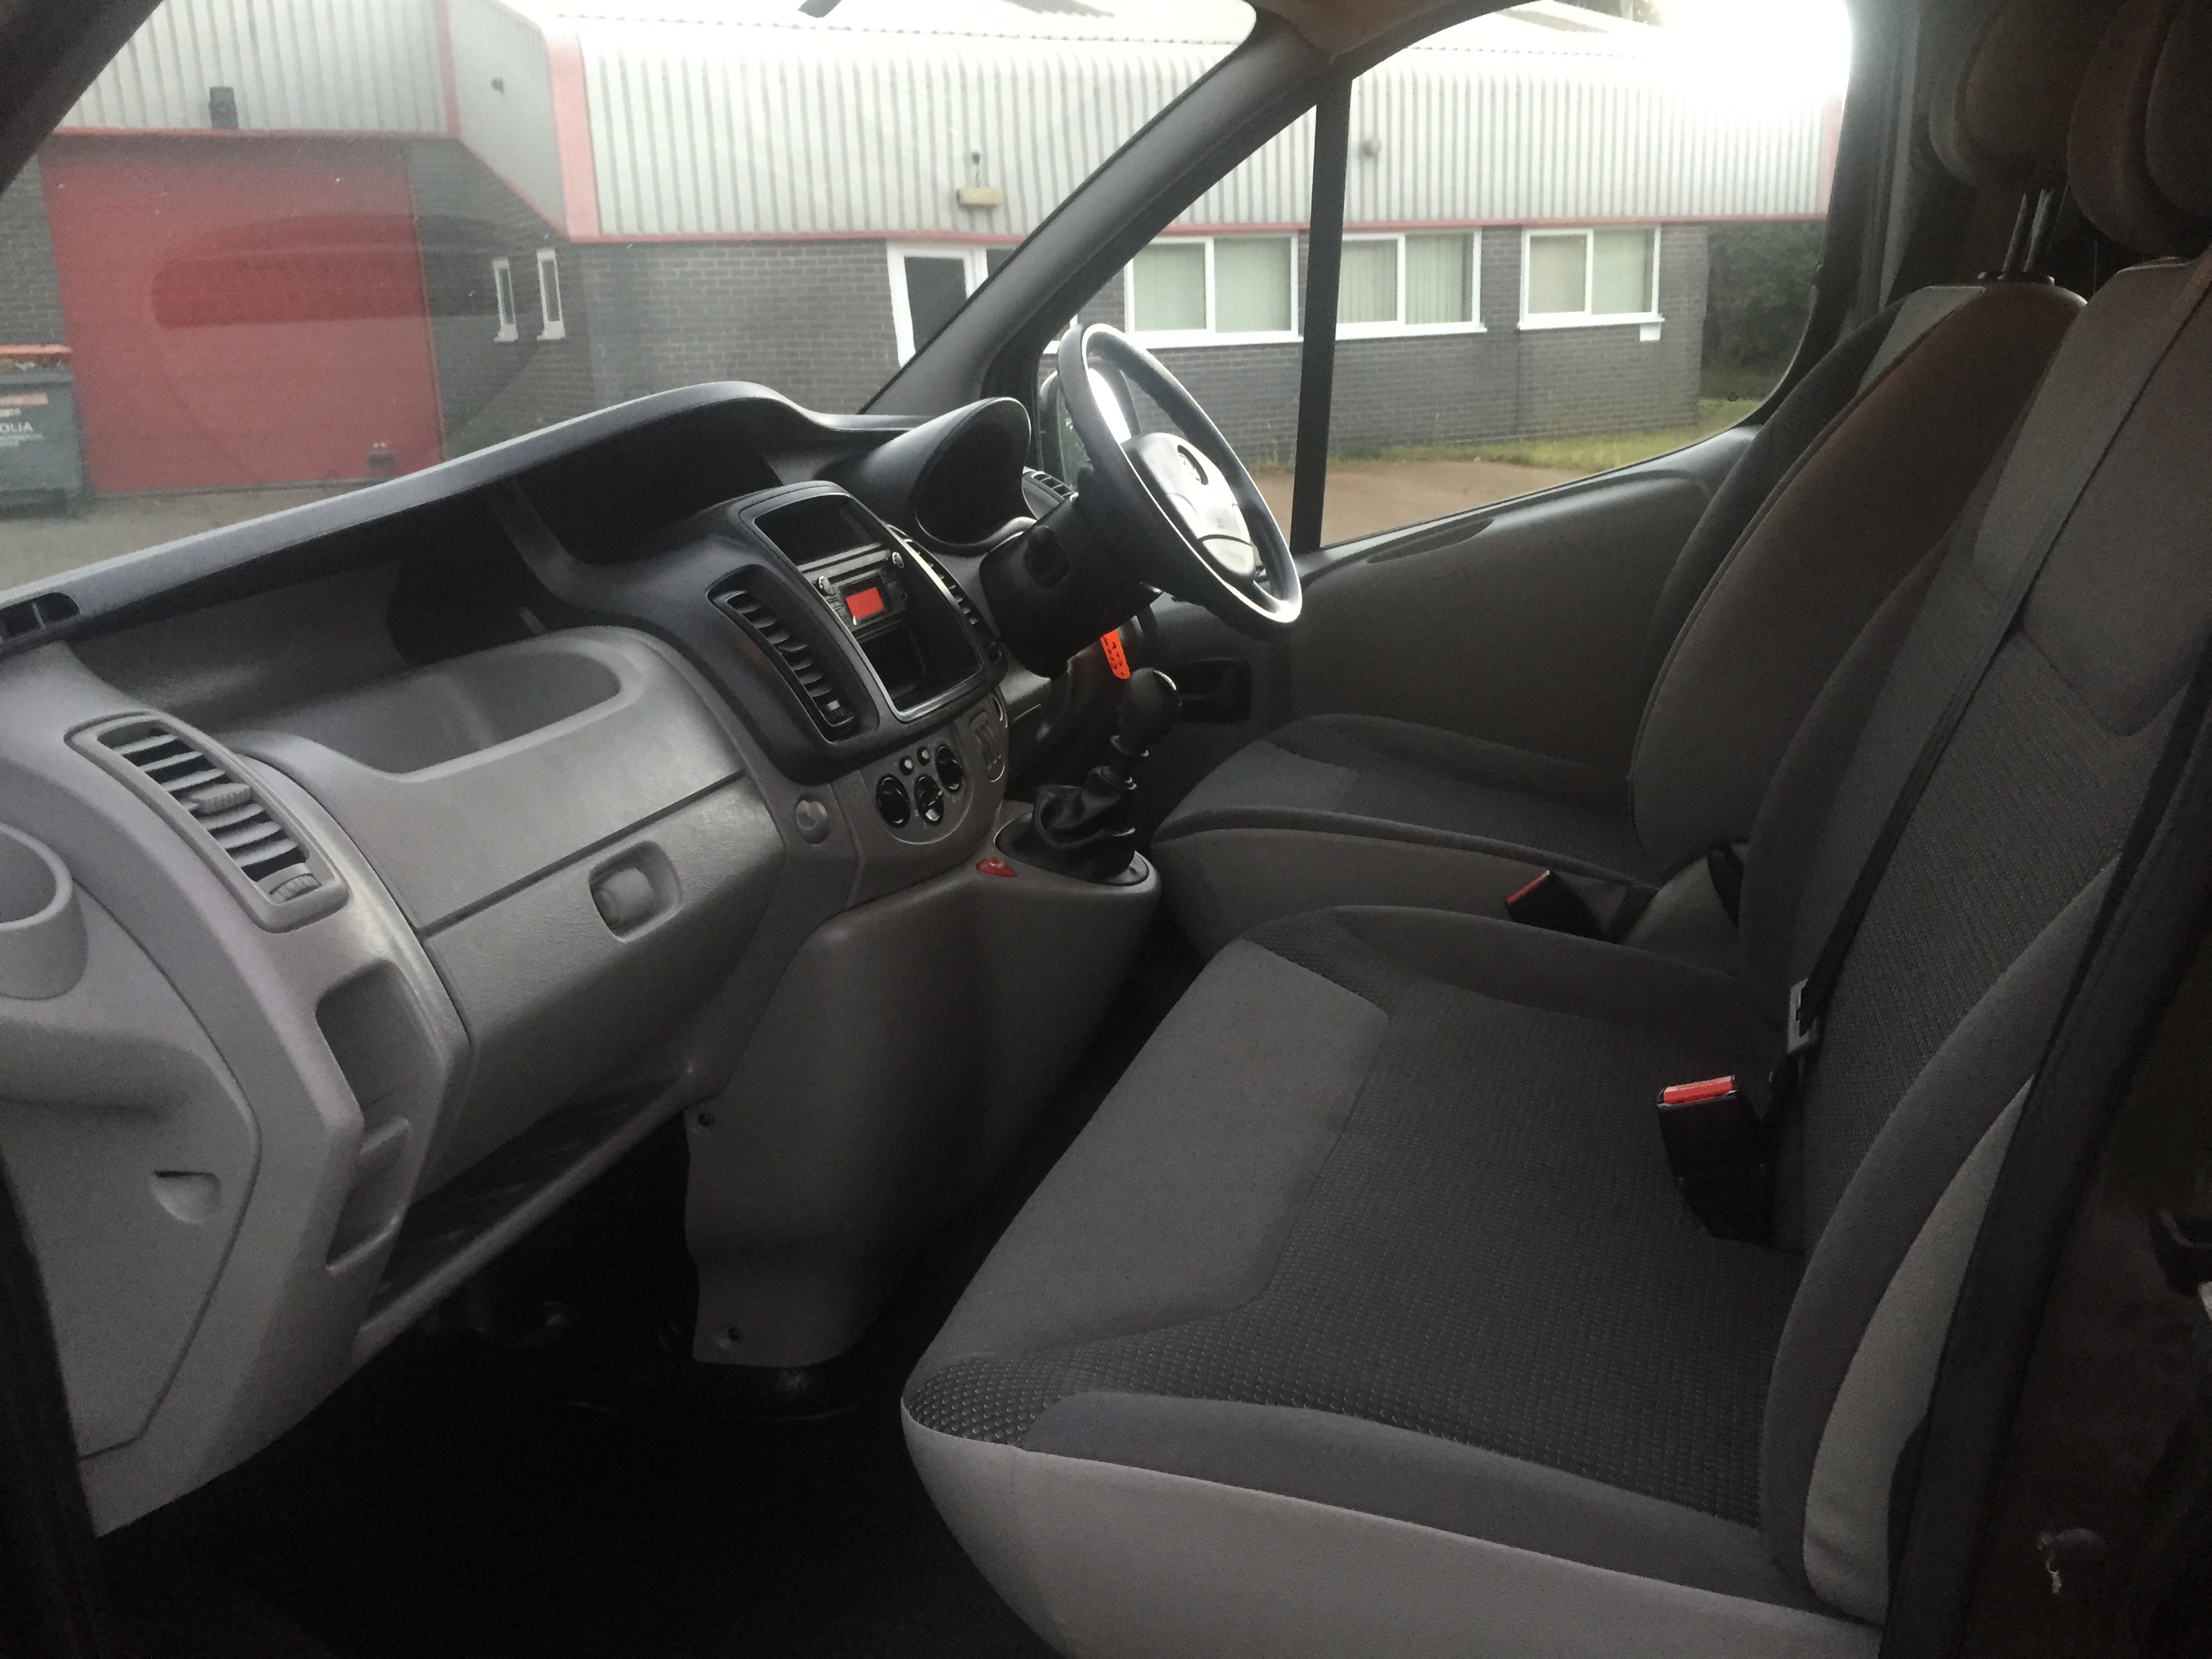 Vauxhall Vivaro 6 Seater Crew Cab (14 Reg) - Sold - Ymark Vehicle Services